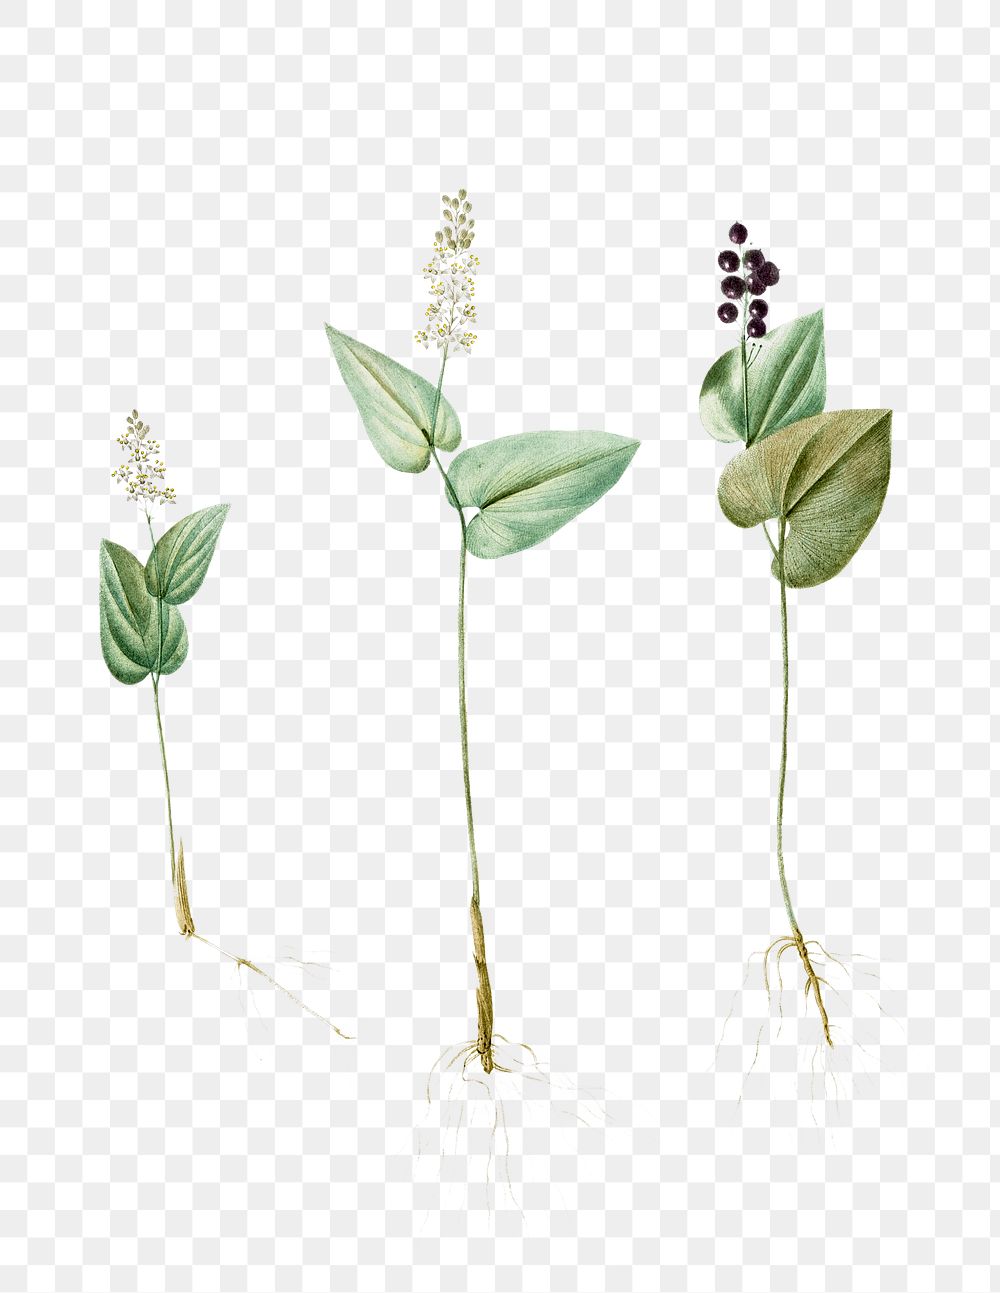 Mayanthemum png sticker, vintage botanical illustration, transparent background